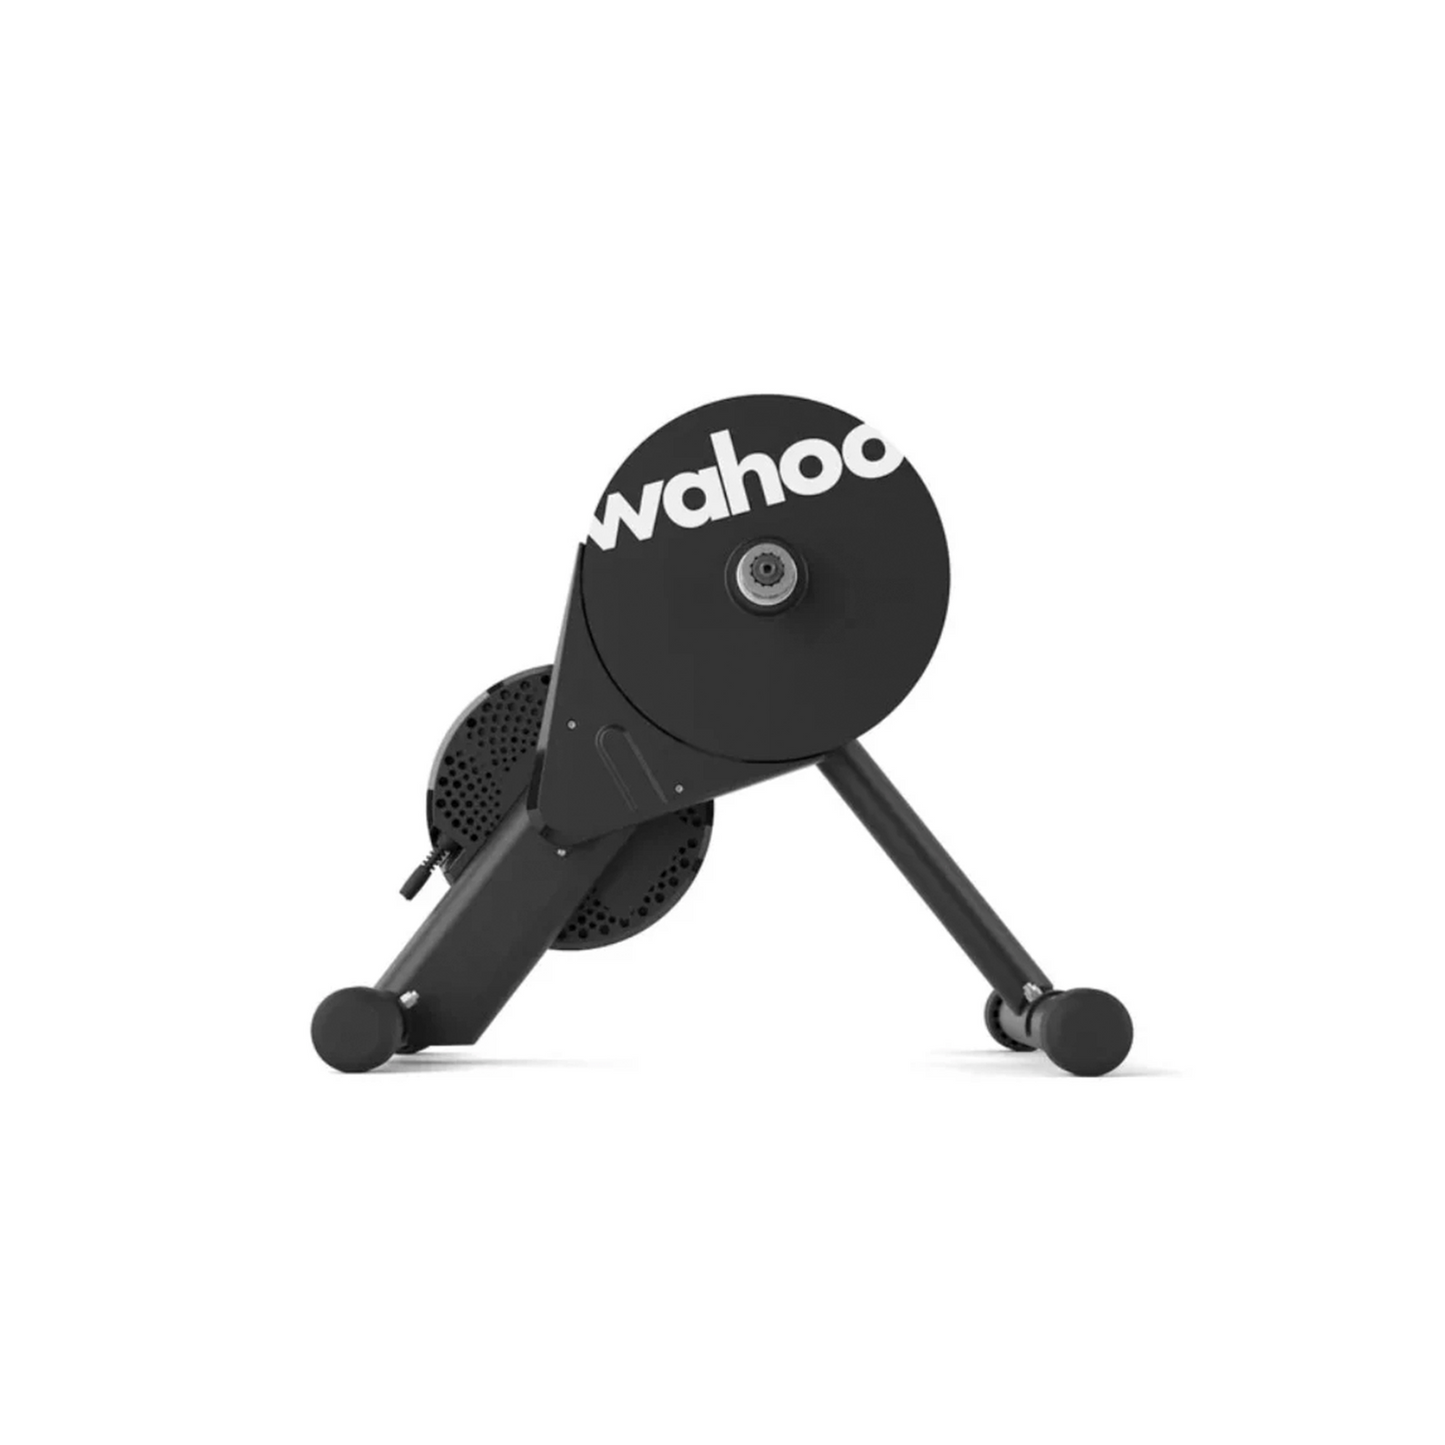 Wahoo Kickr Core | Complete Cyclist - Maximum Power Output: 1800 Watts Maximum Simulated Grade: 16% Minimum Simulated Grade: -10% Product Weight: 40 lb / 18 kg Drivetrain: Belt Drive Resistance